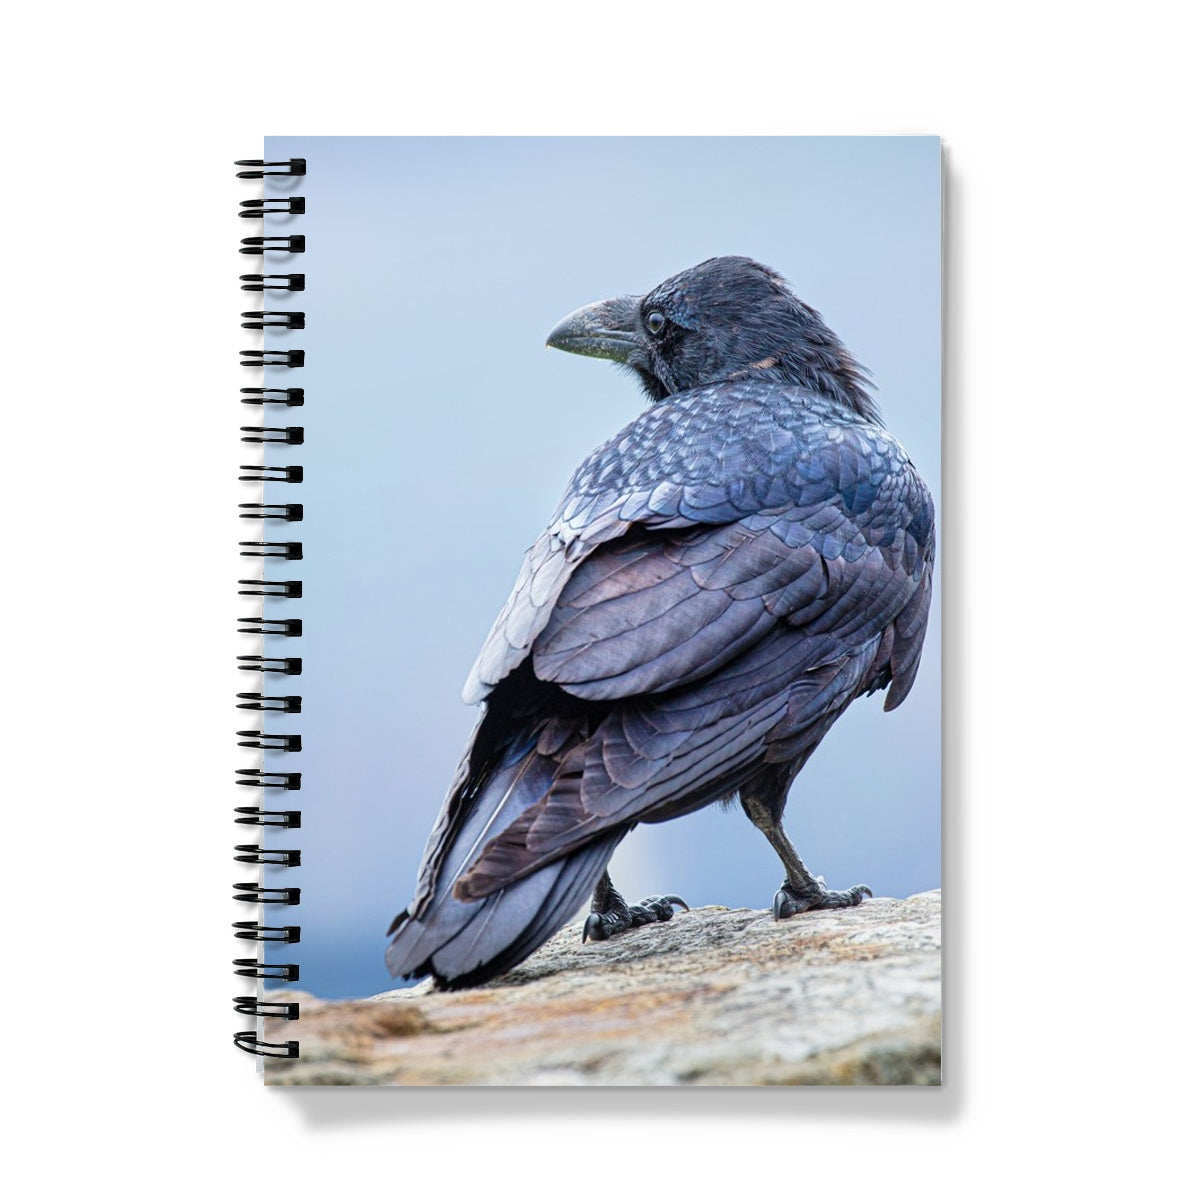 The Raven of Ireland Notebook